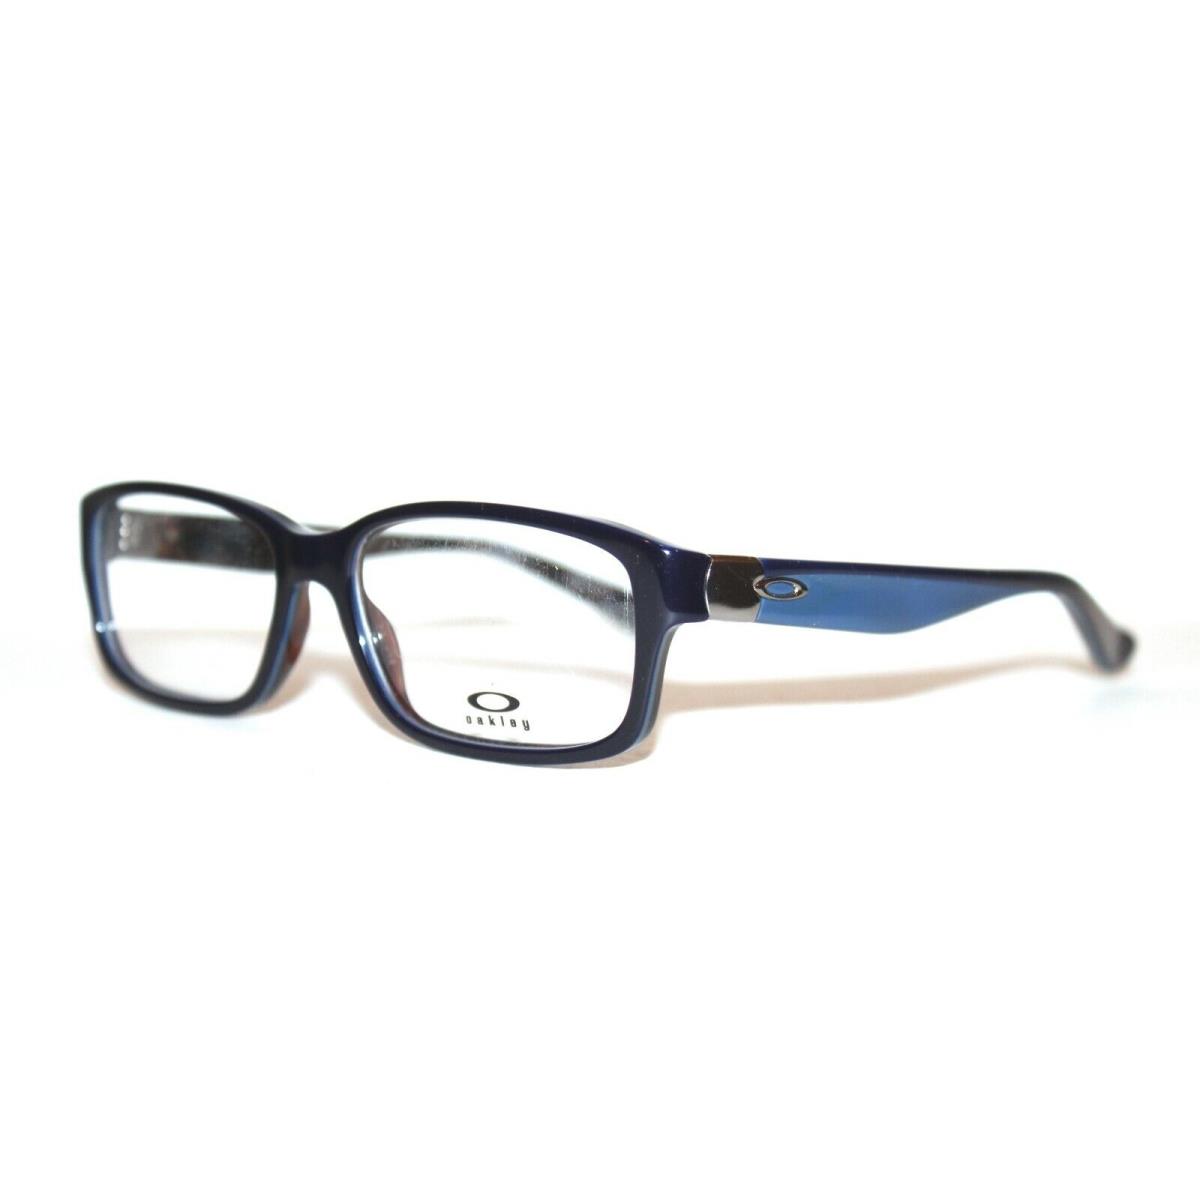 Oakley OX1072 Entryfee 02 Blue Tortoise RX Eyeglasses 52-15-141 - Frame: Blue